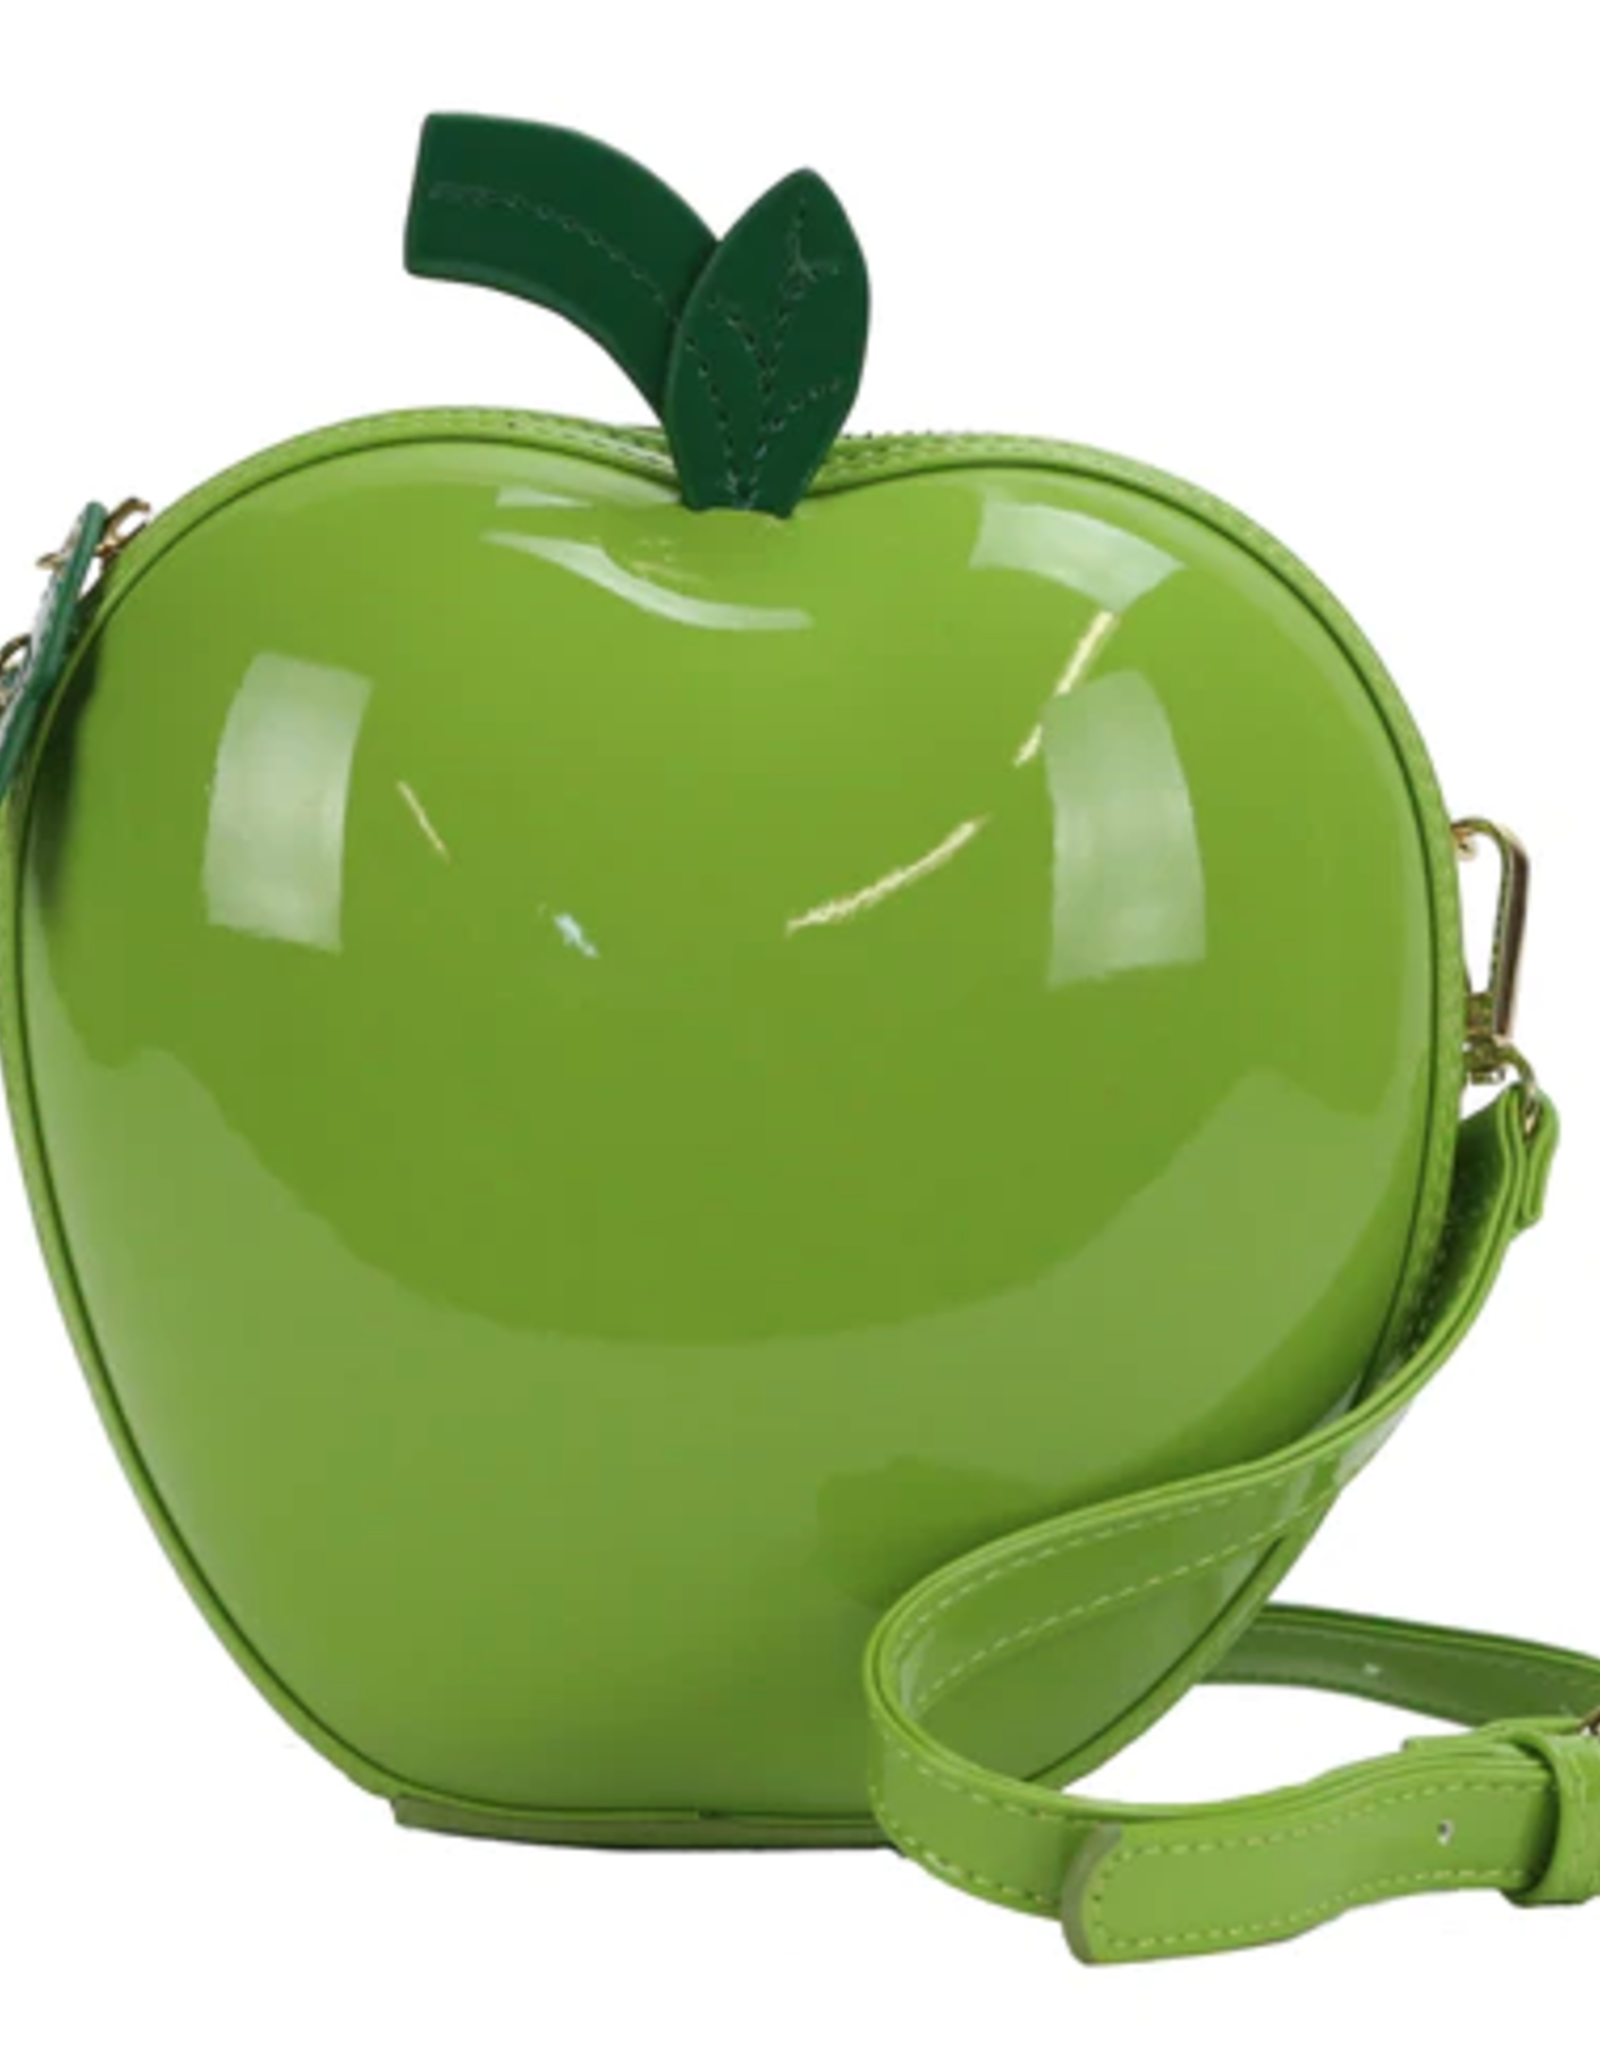 Apple Bag Pick Your Own Bag | Apple Bag Lady